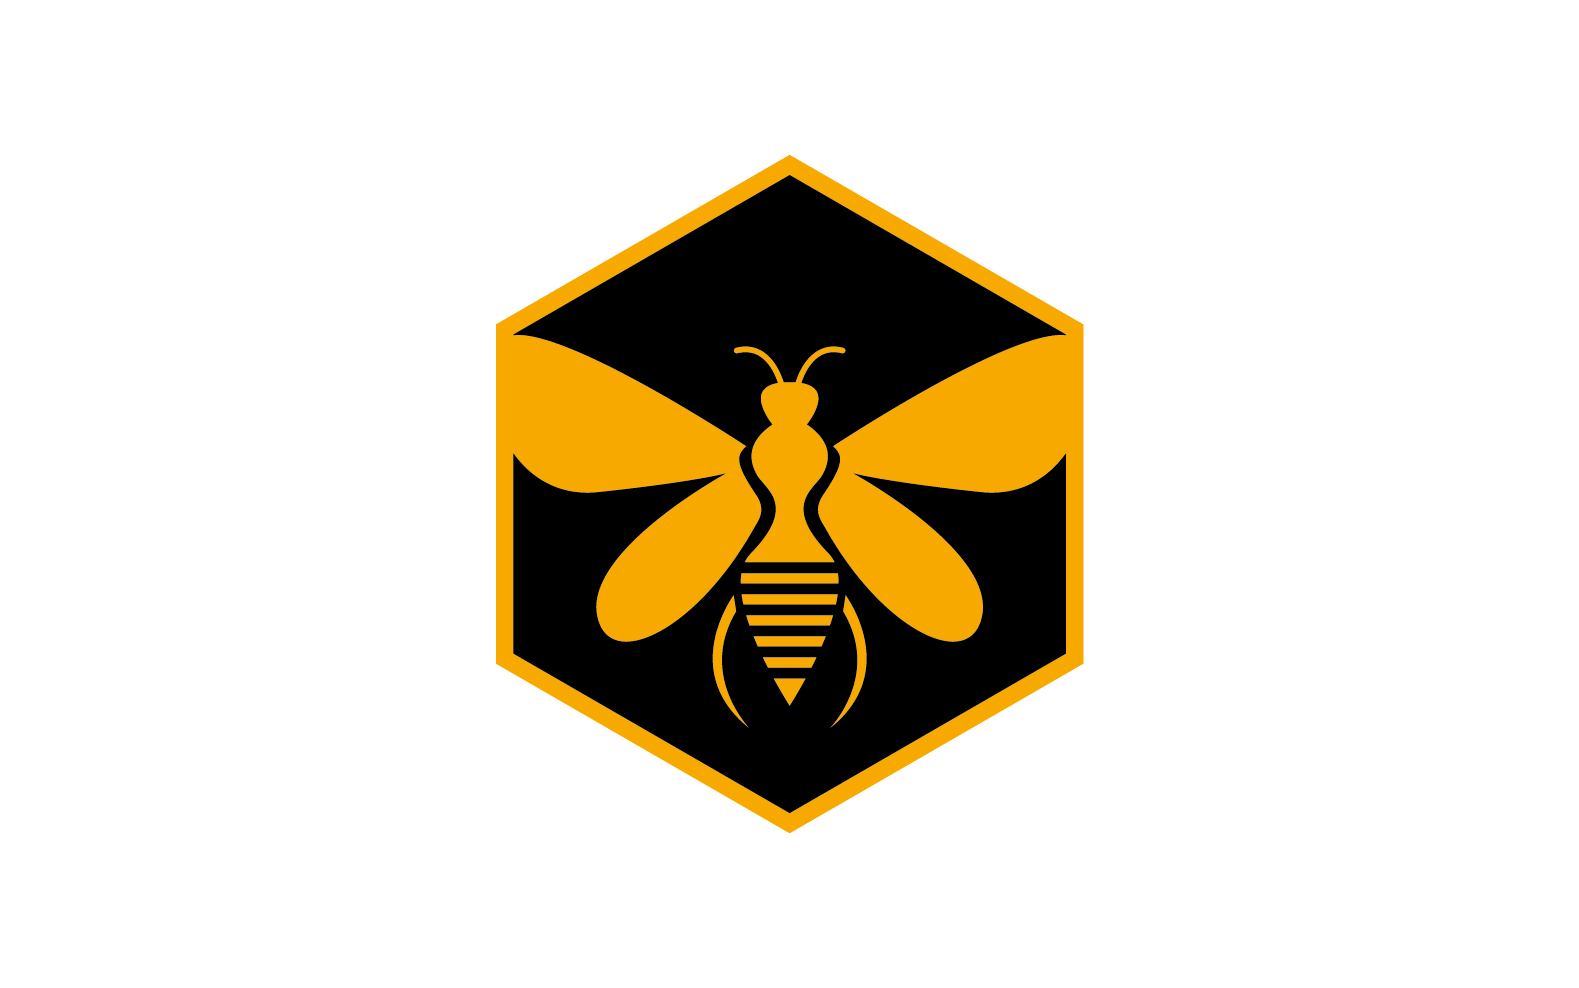 Bee honeycomb animal logo design template vector v9